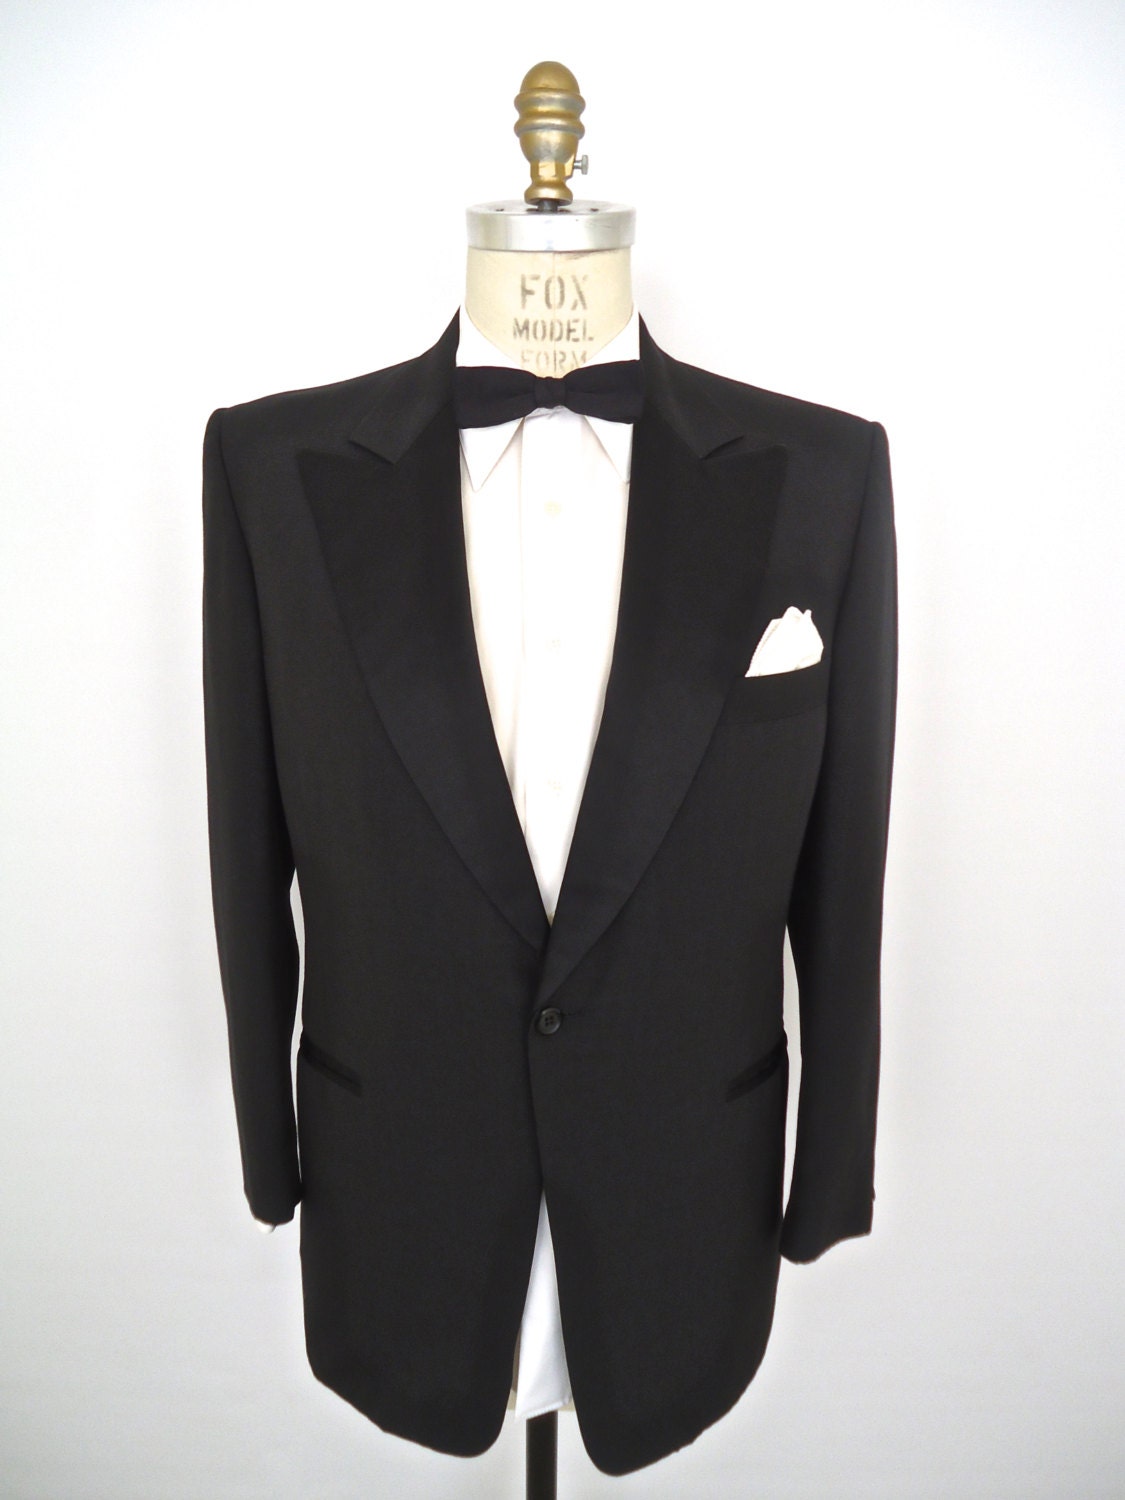 1960s-70s Satin Peak Lapel Tuxedo Jacket / vintage black